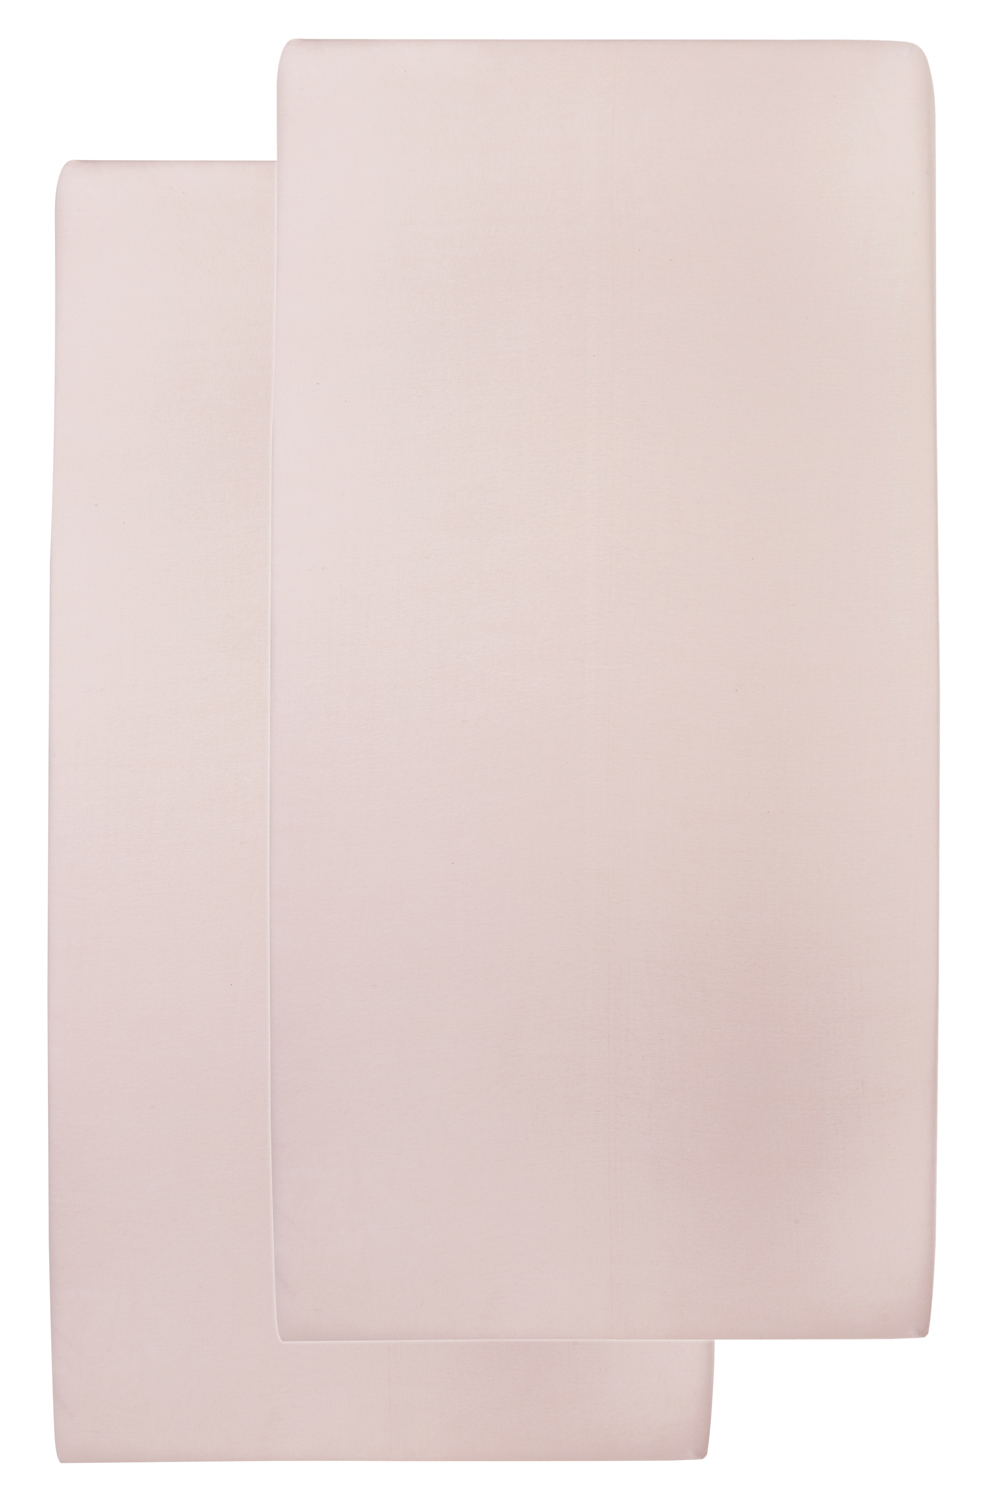 Hoeslaken juniorbed 2-pack Uni - light pink - 70x140/150cm